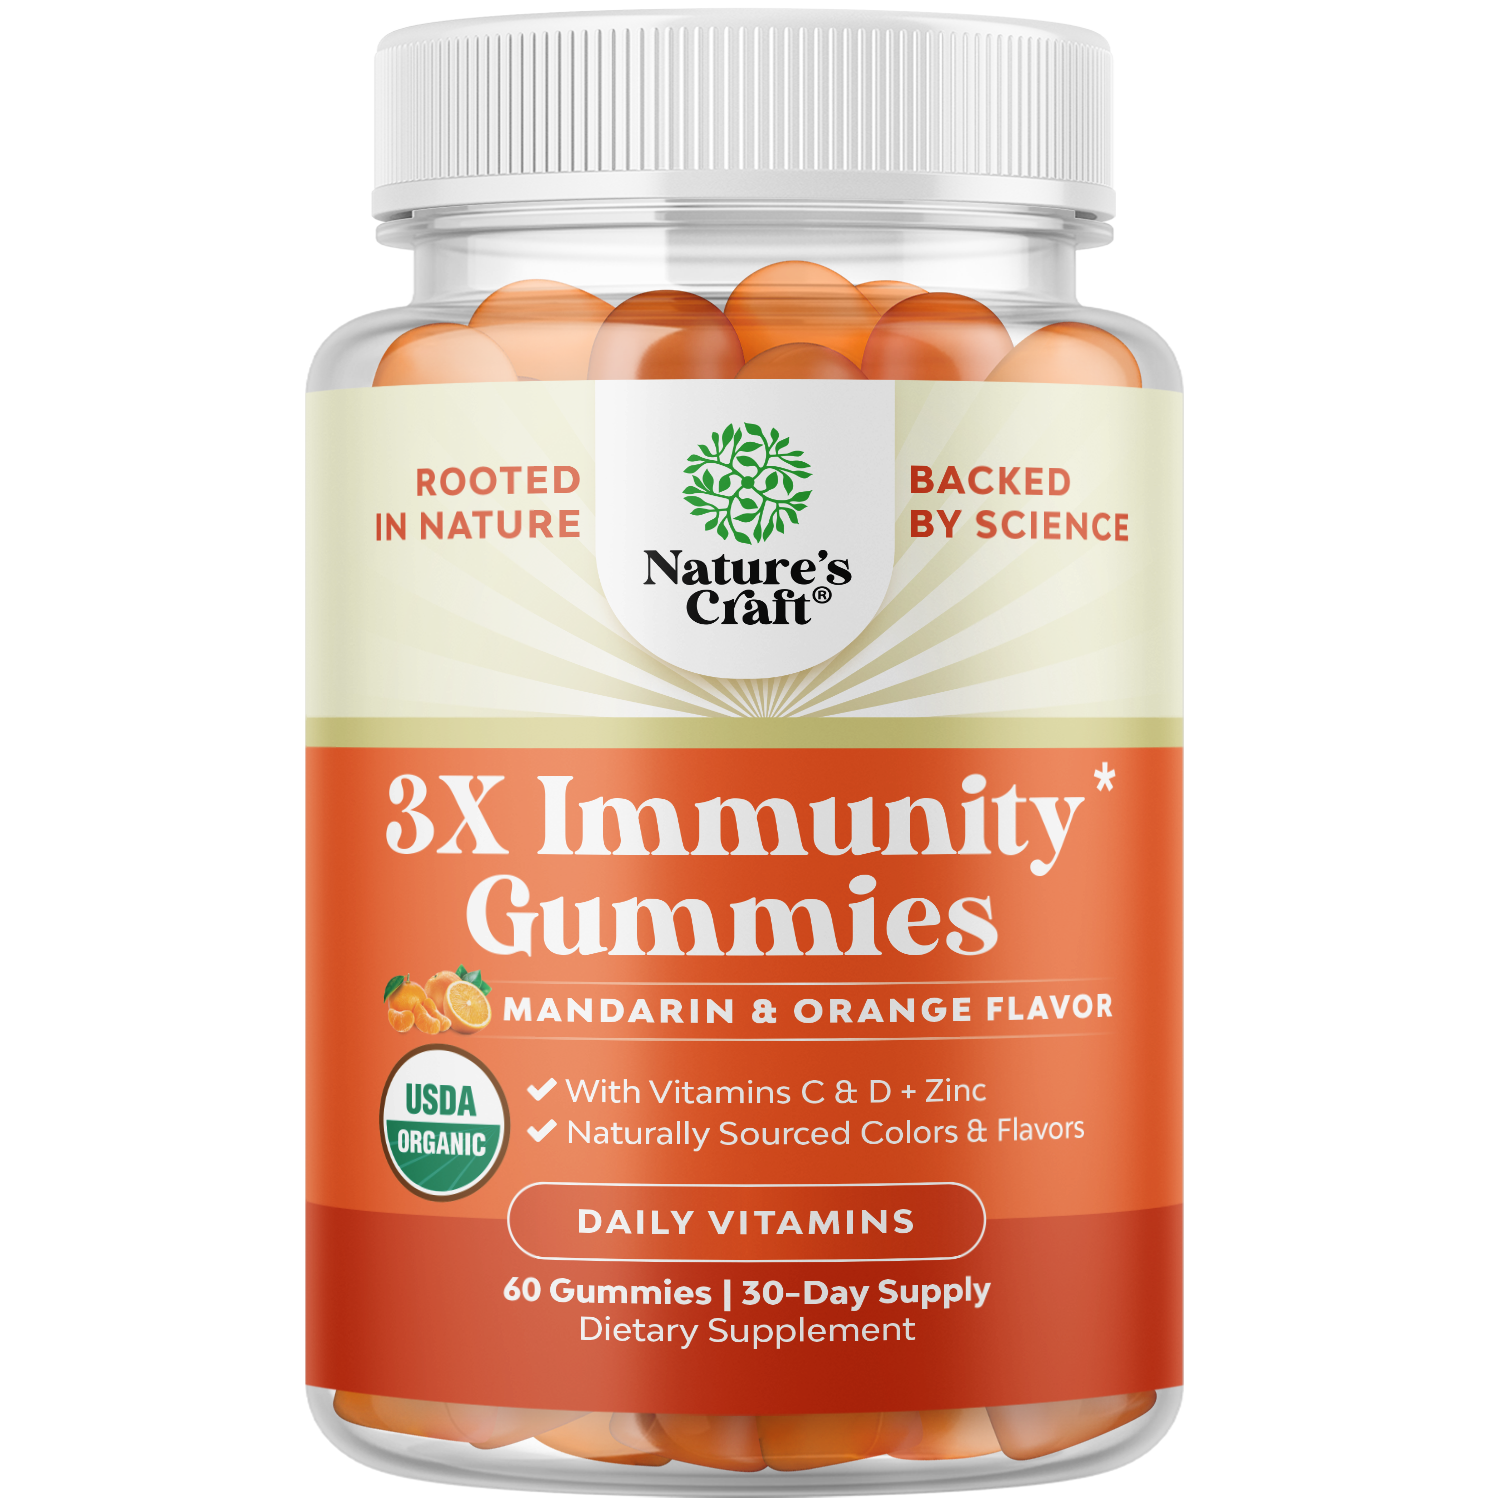 3X Immunity Gummies - 60 Gummies